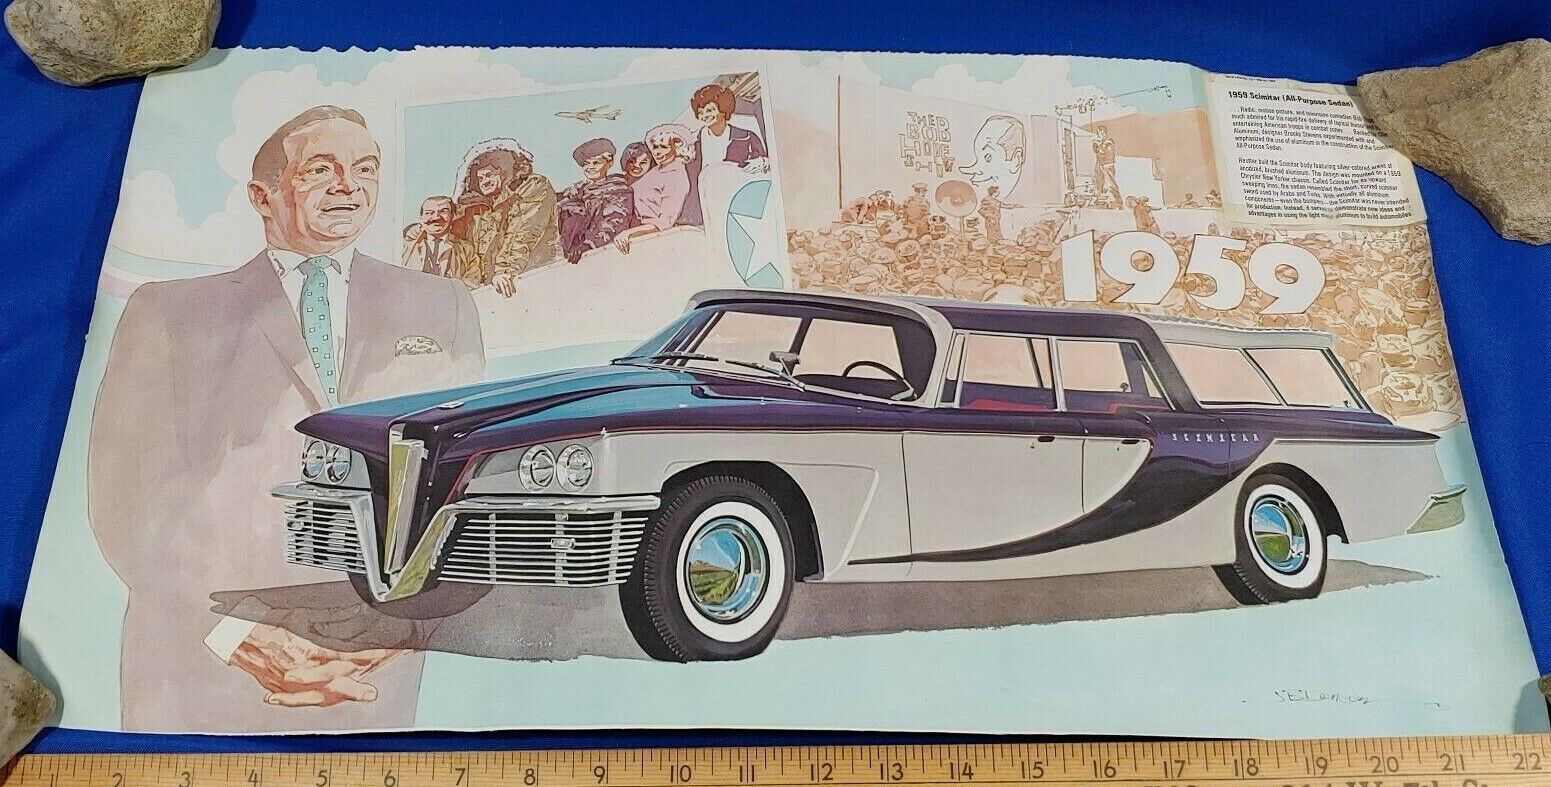 1959 Scimitar Bob Hope Car Antique Auto Poster Sign Litho Art Print Advertising 